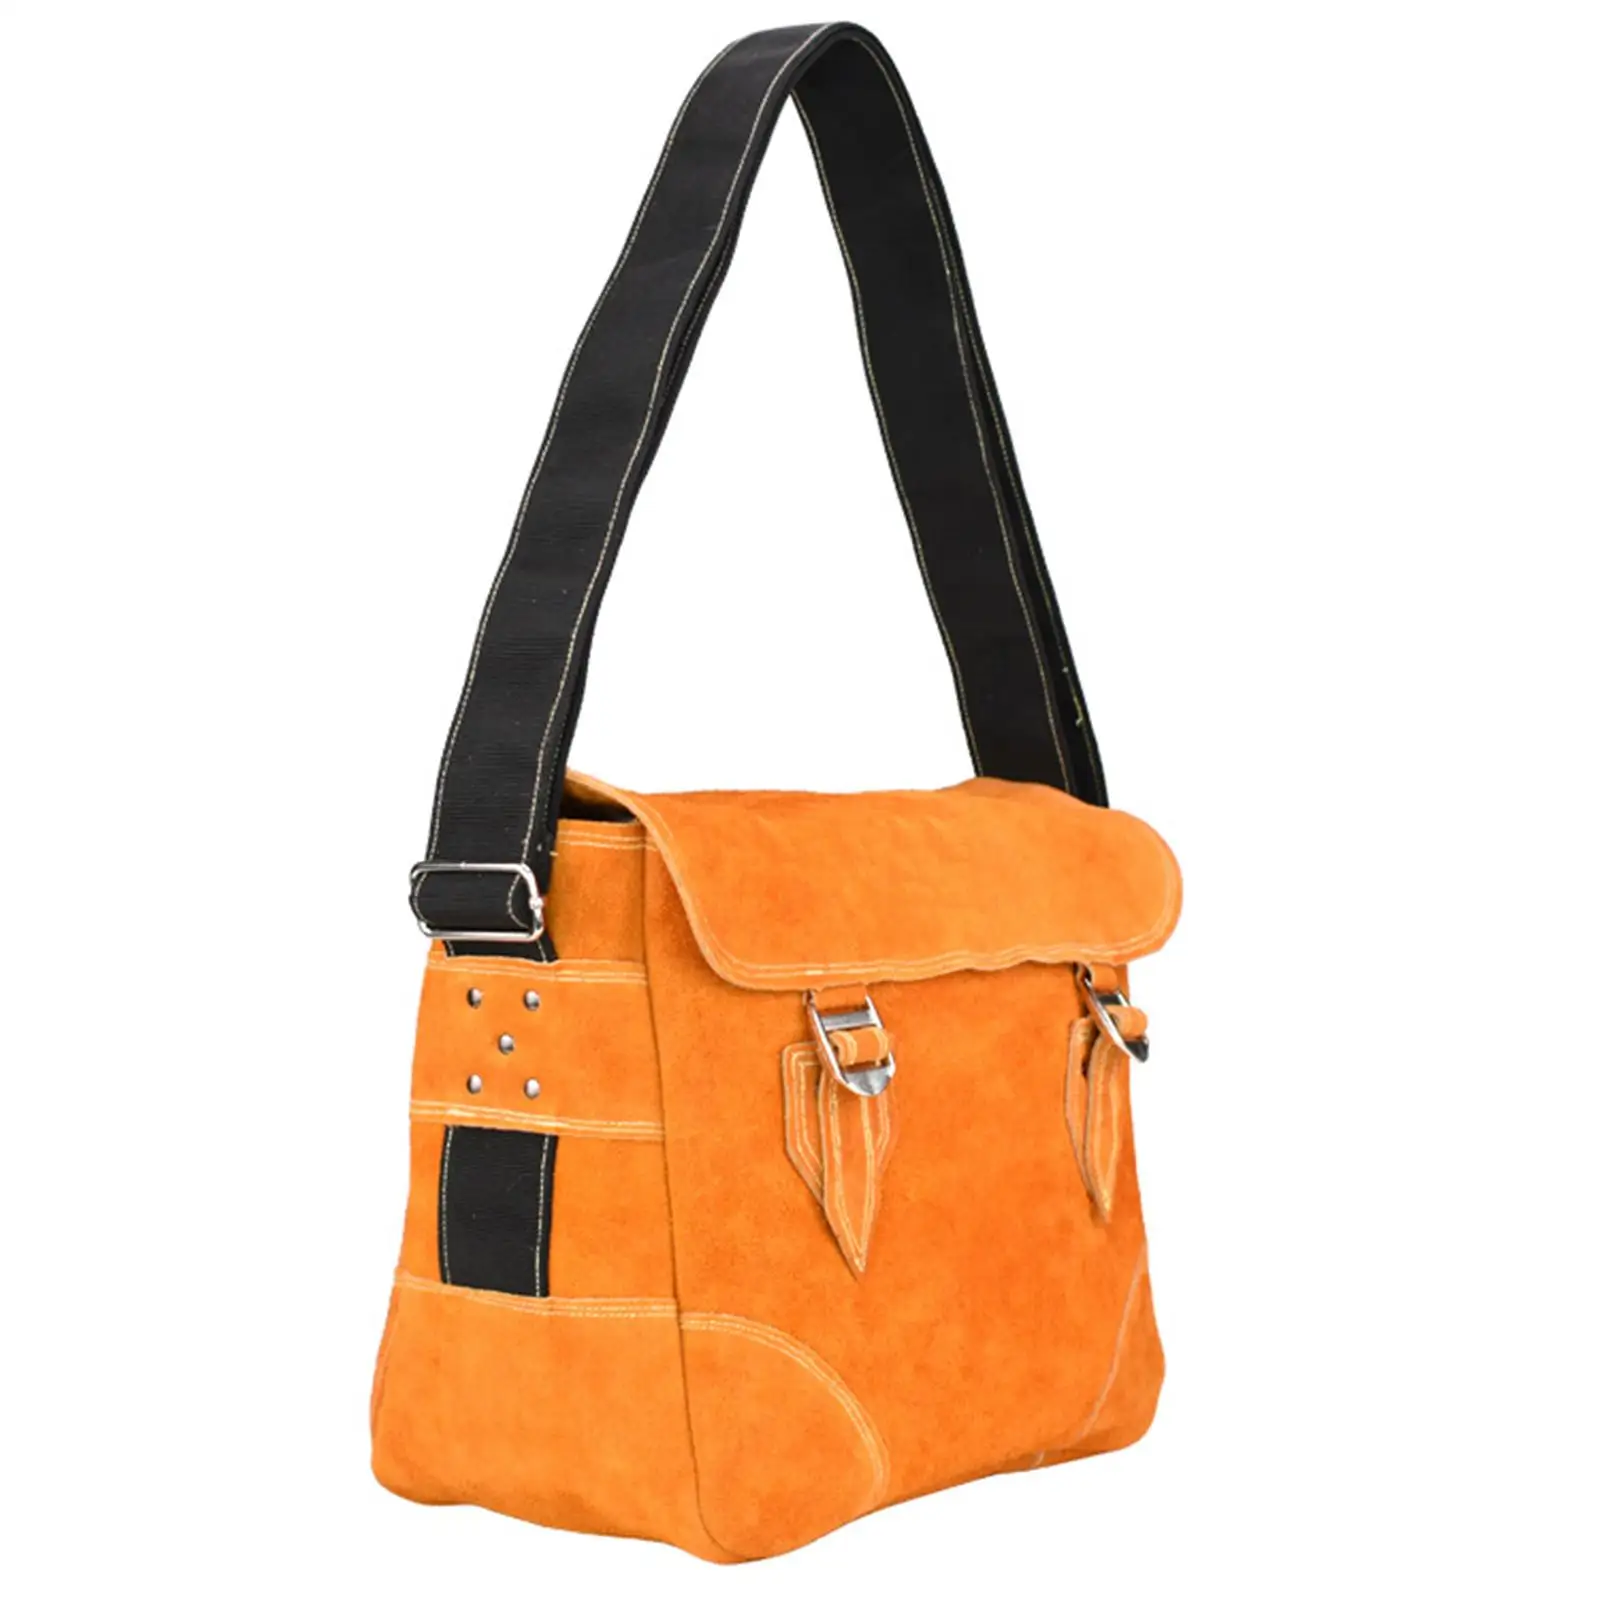 Tool Bag Storage Bag Wear Resistant Adjustable Carry Case for Electrician